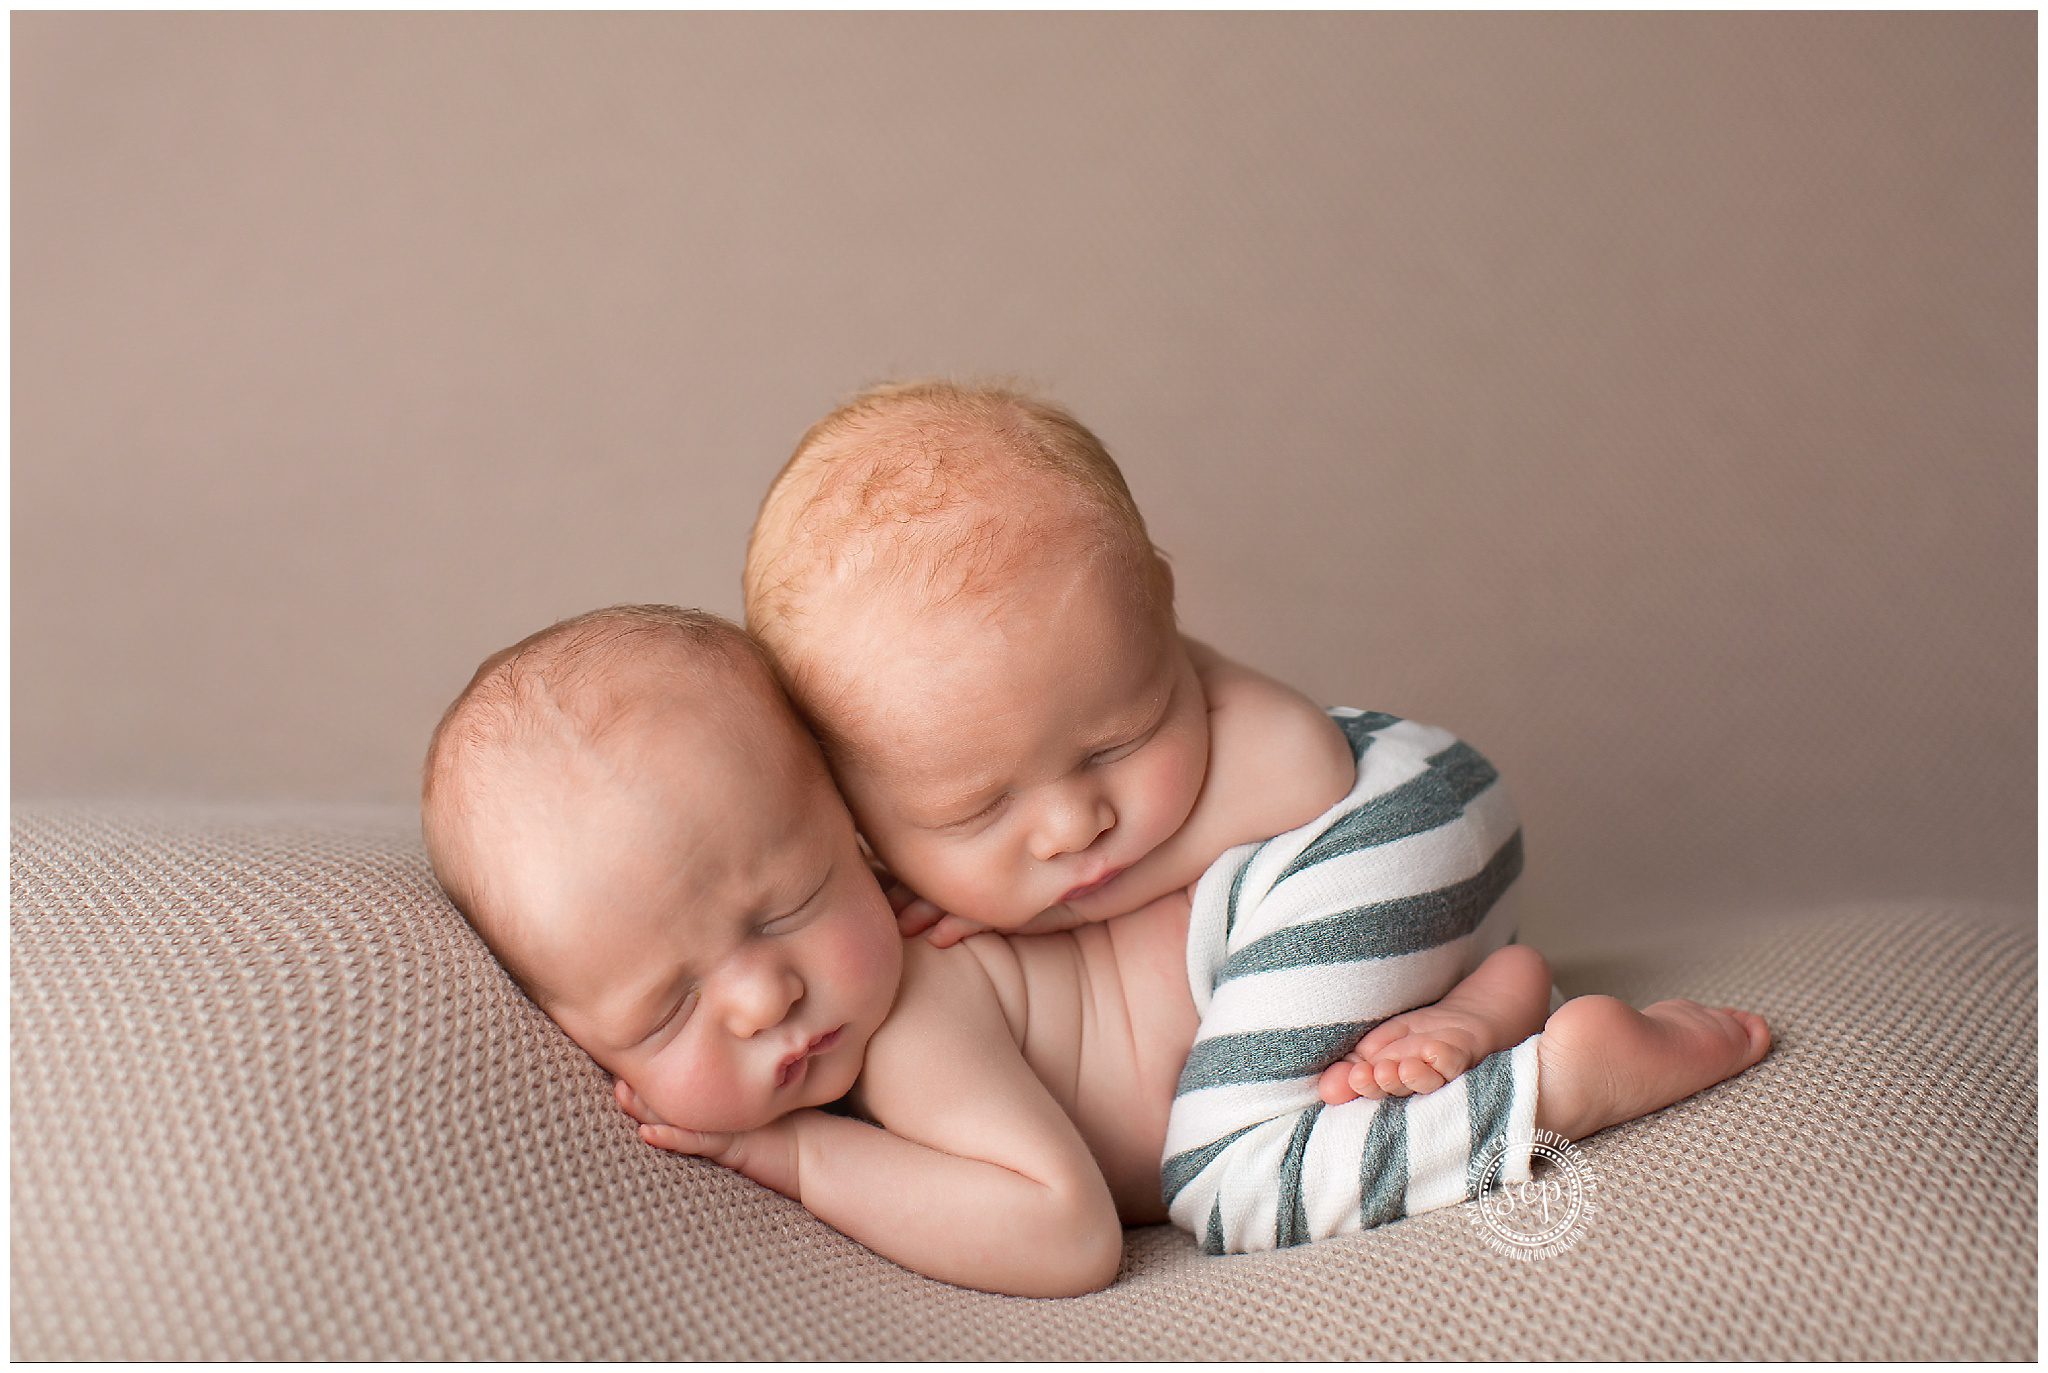 Twins Pictures newborn photos professional photographer 